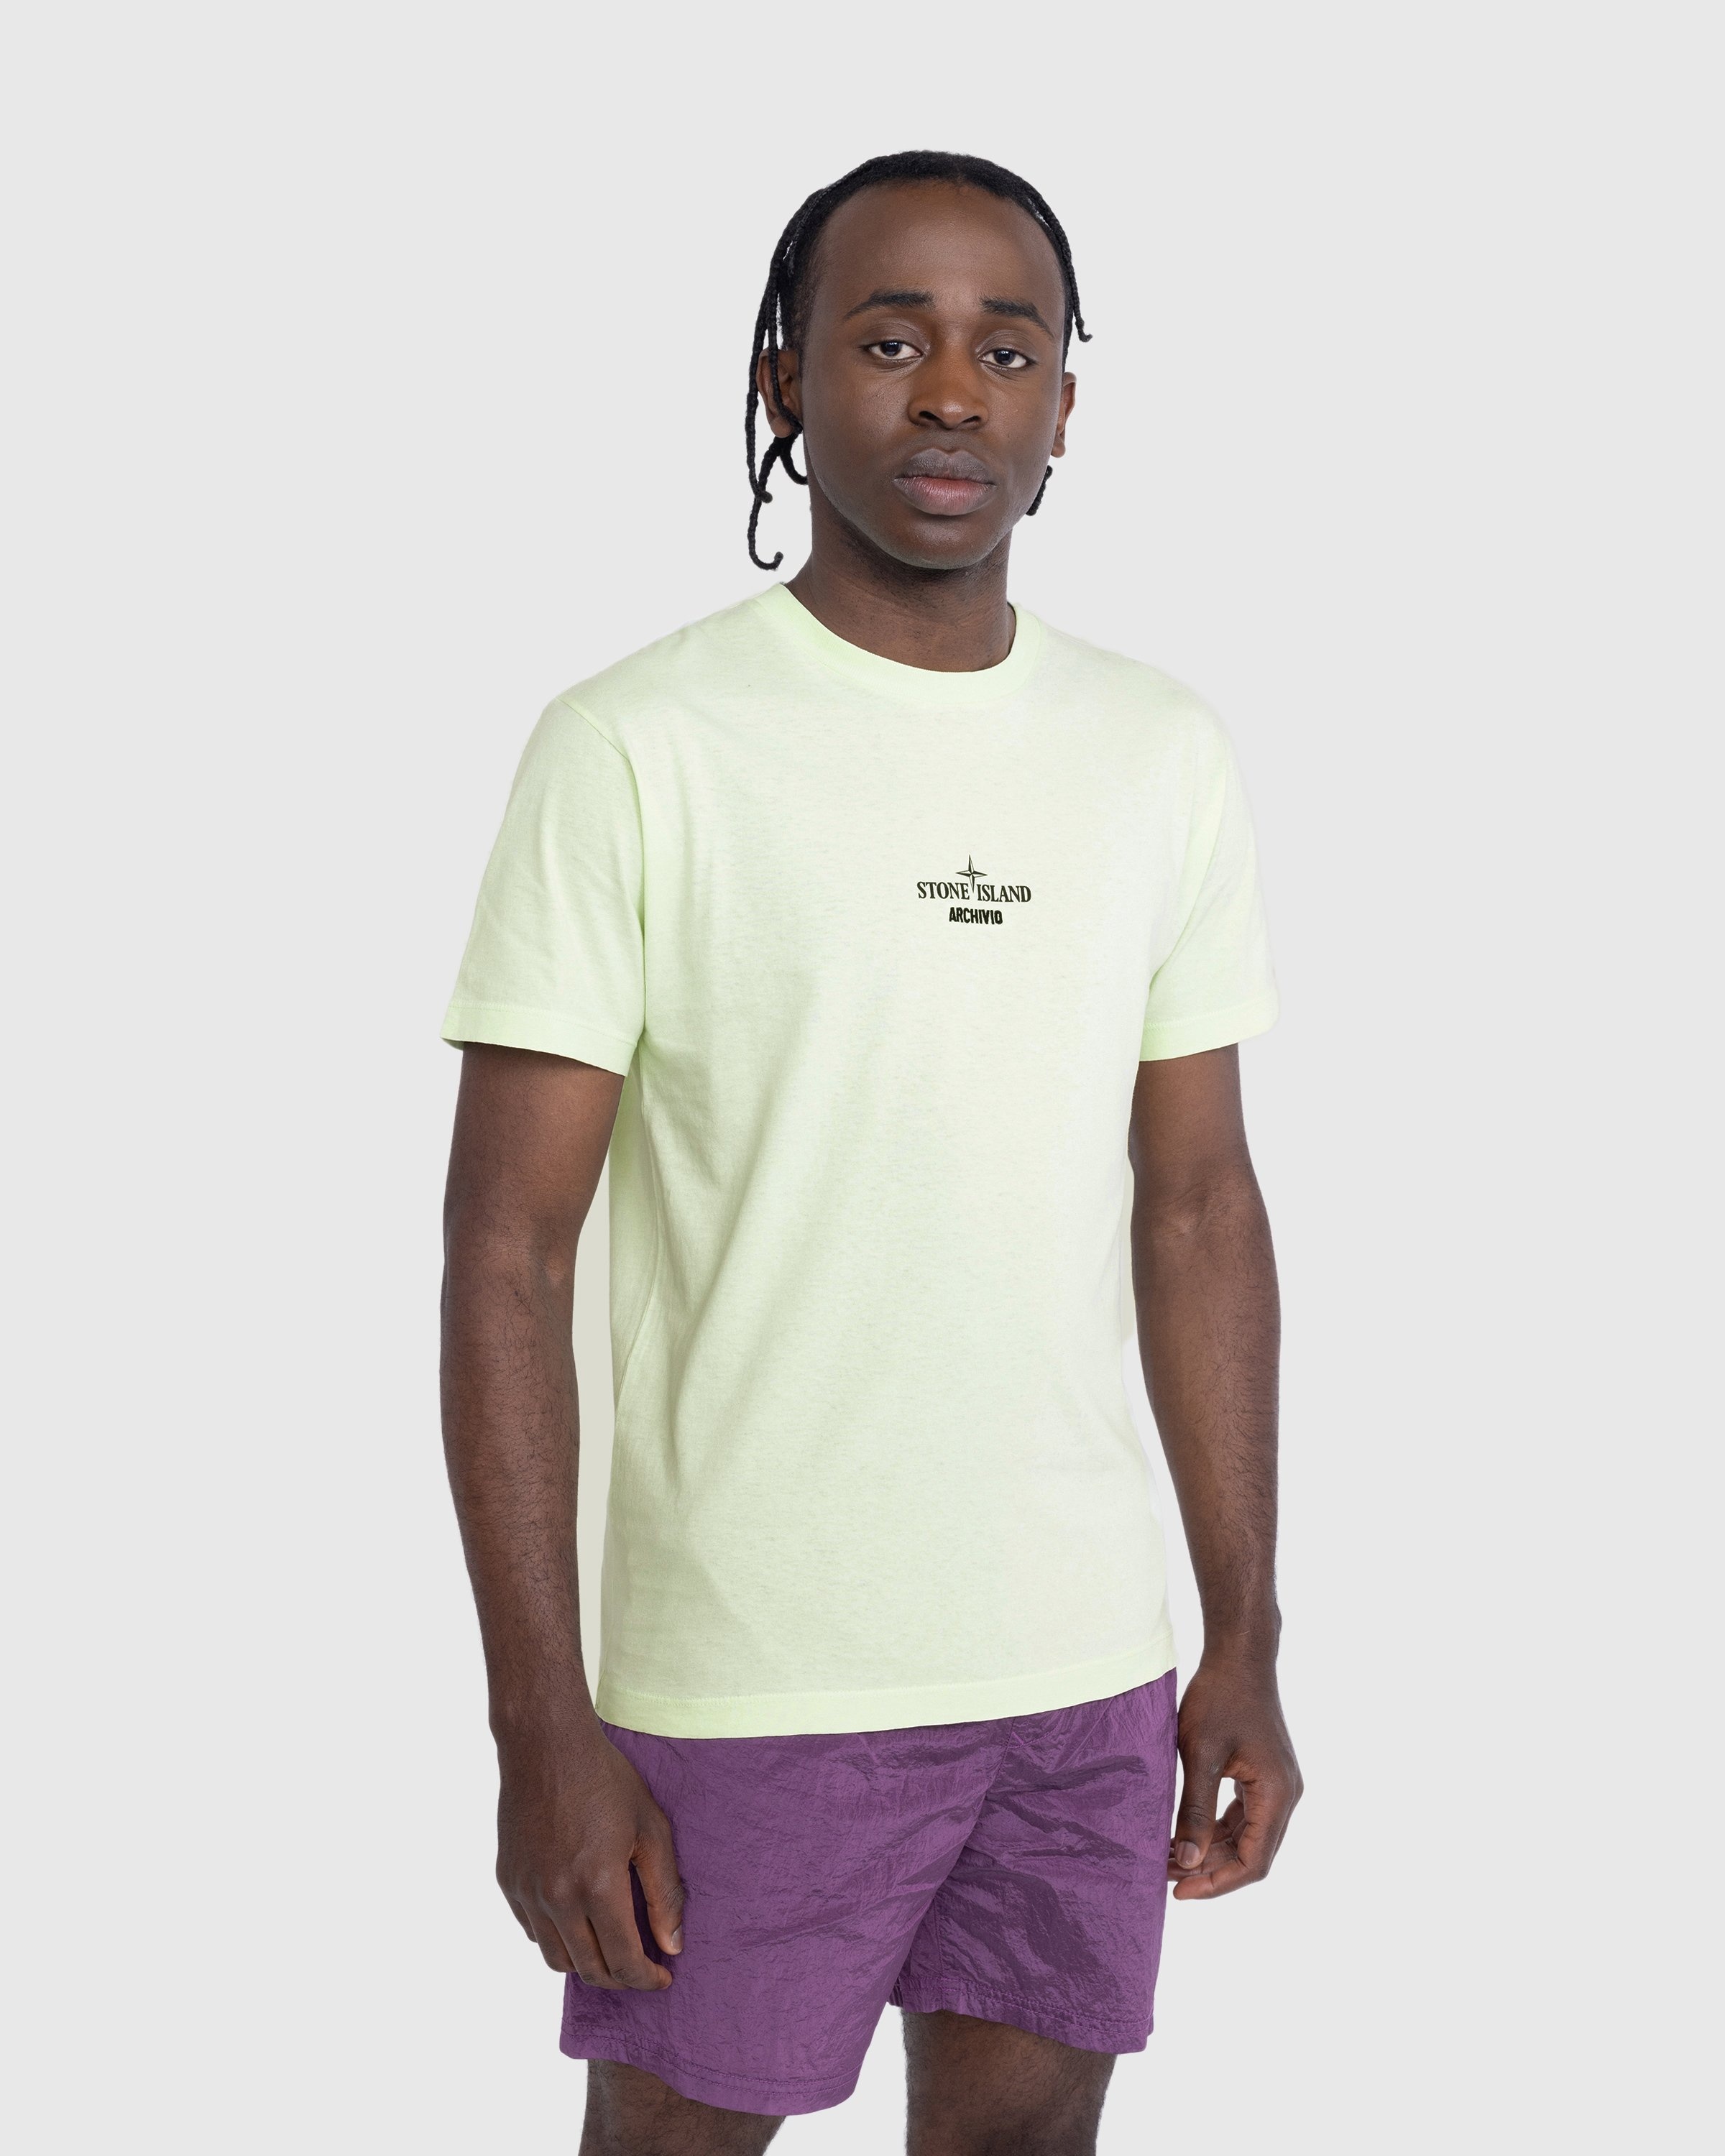 Stone Island – 2NS91 | Highsnobiety T-Shirt Green Shop